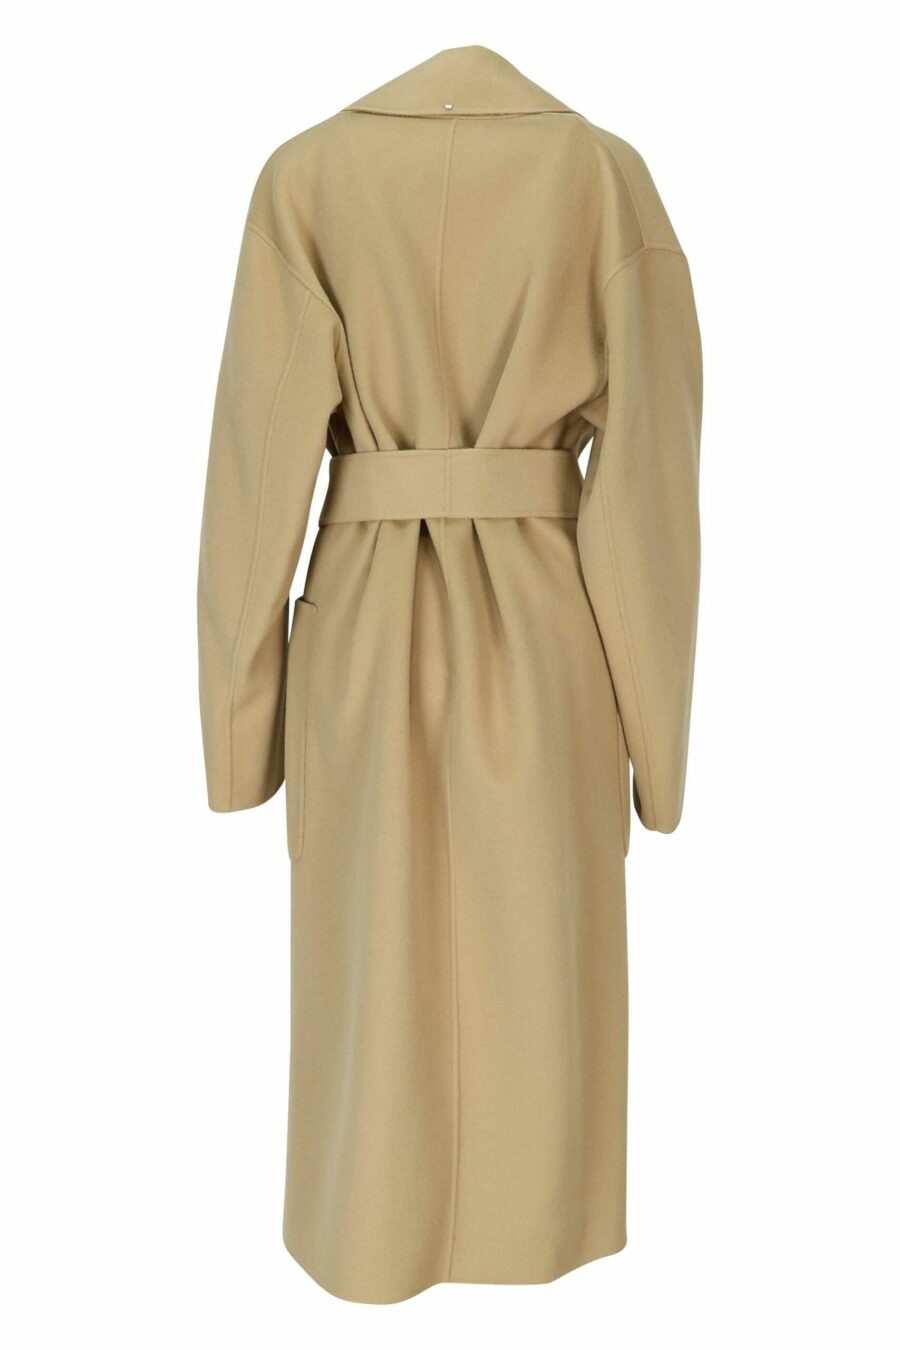 Abrigo beige largo de lana con bolsillos - 20110241060162 2 scaled